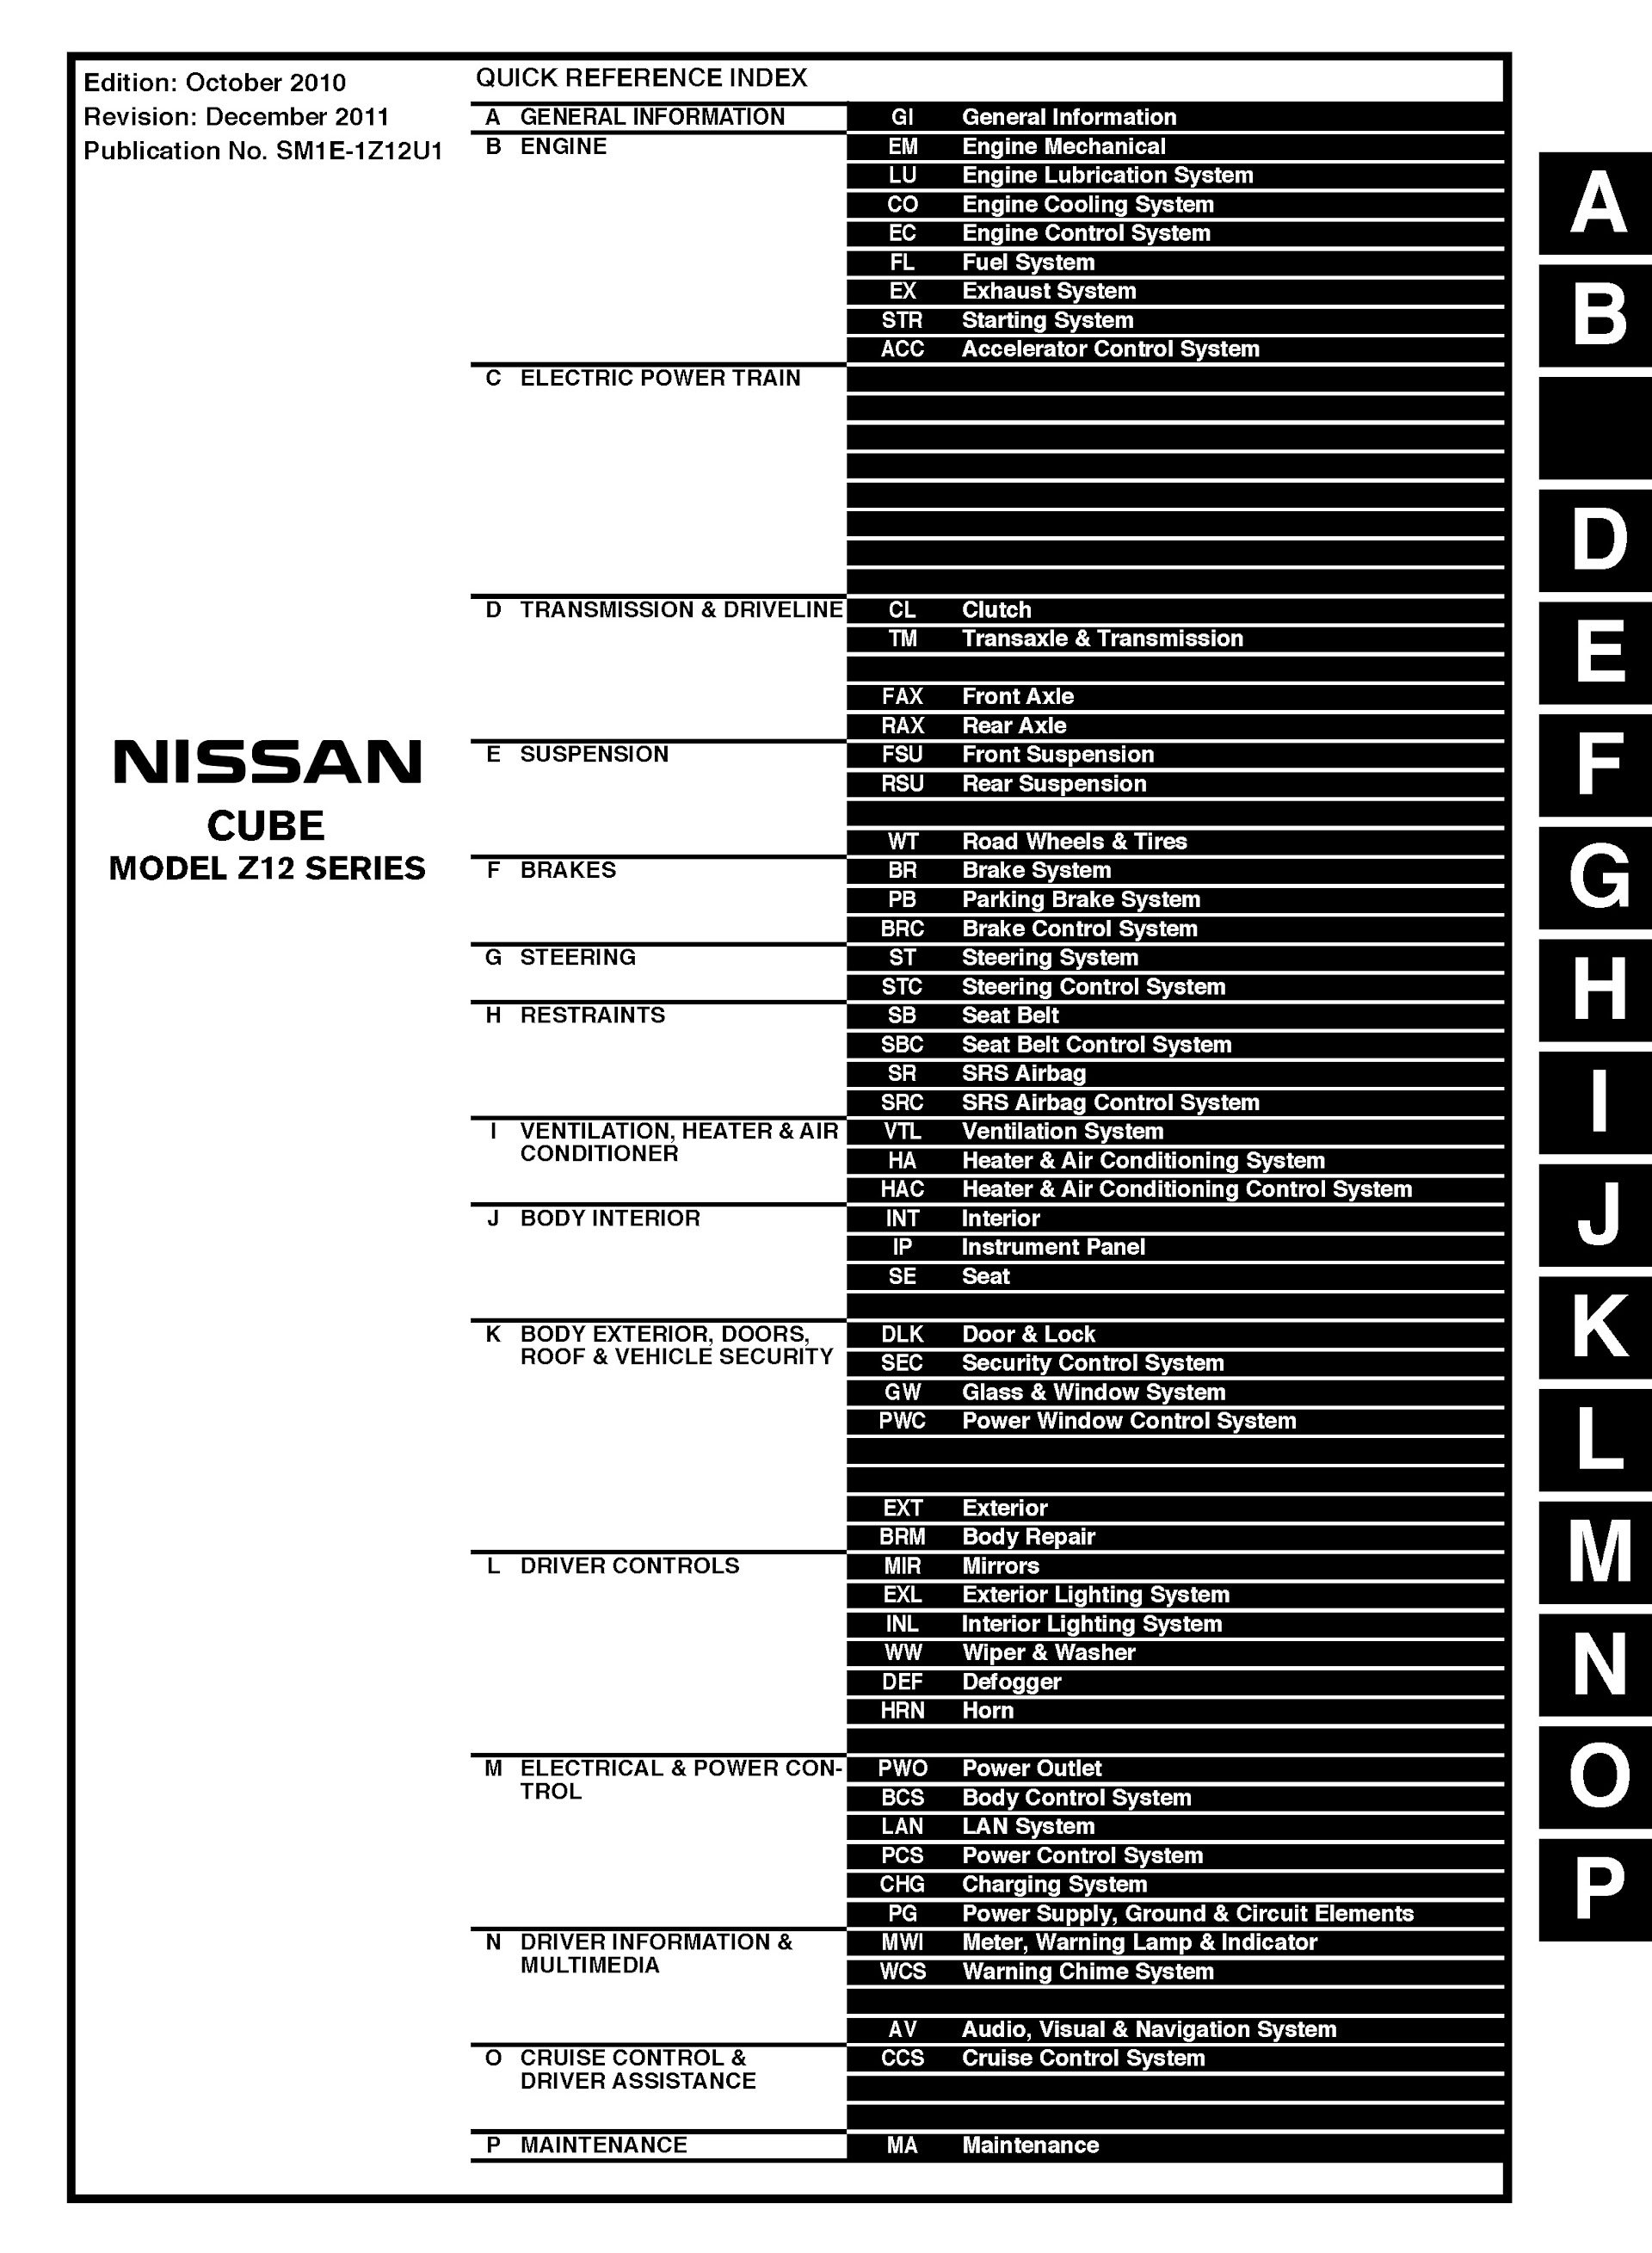 2011 Nissan Cube Repair Manual.